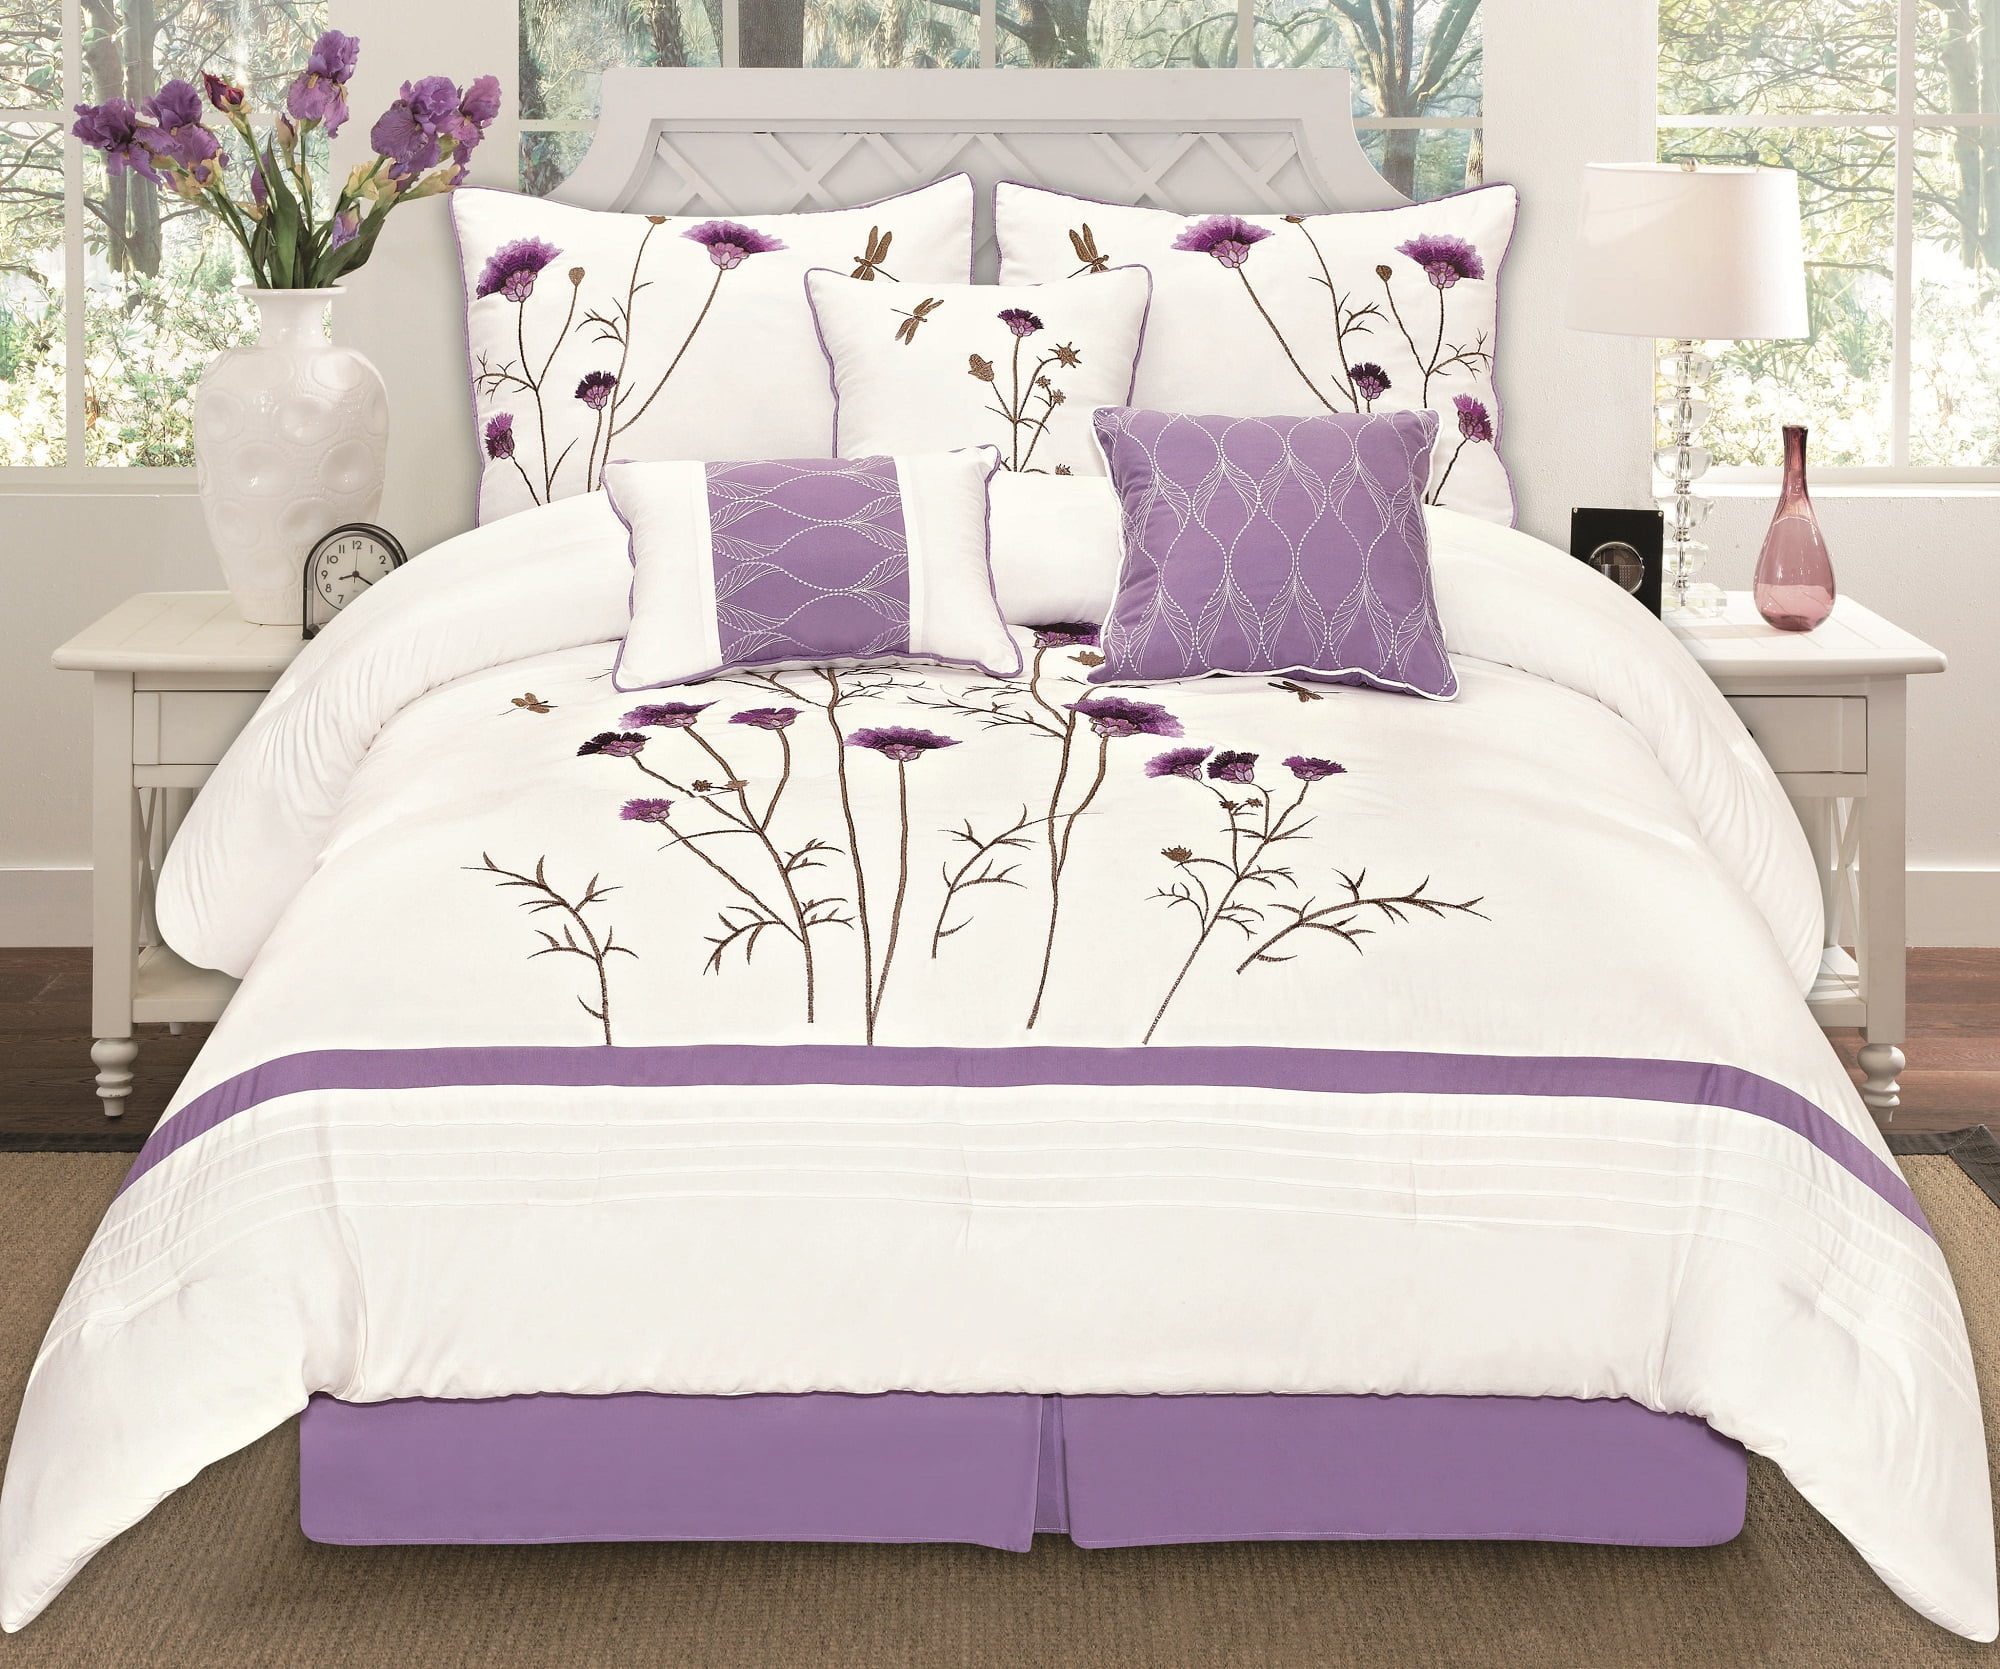 Z&L Home Twin Size Bedding Sets Purple Decor Lavender Plants Floral Luxury Soft Duvet Cover Set Bedspread for Women Girls